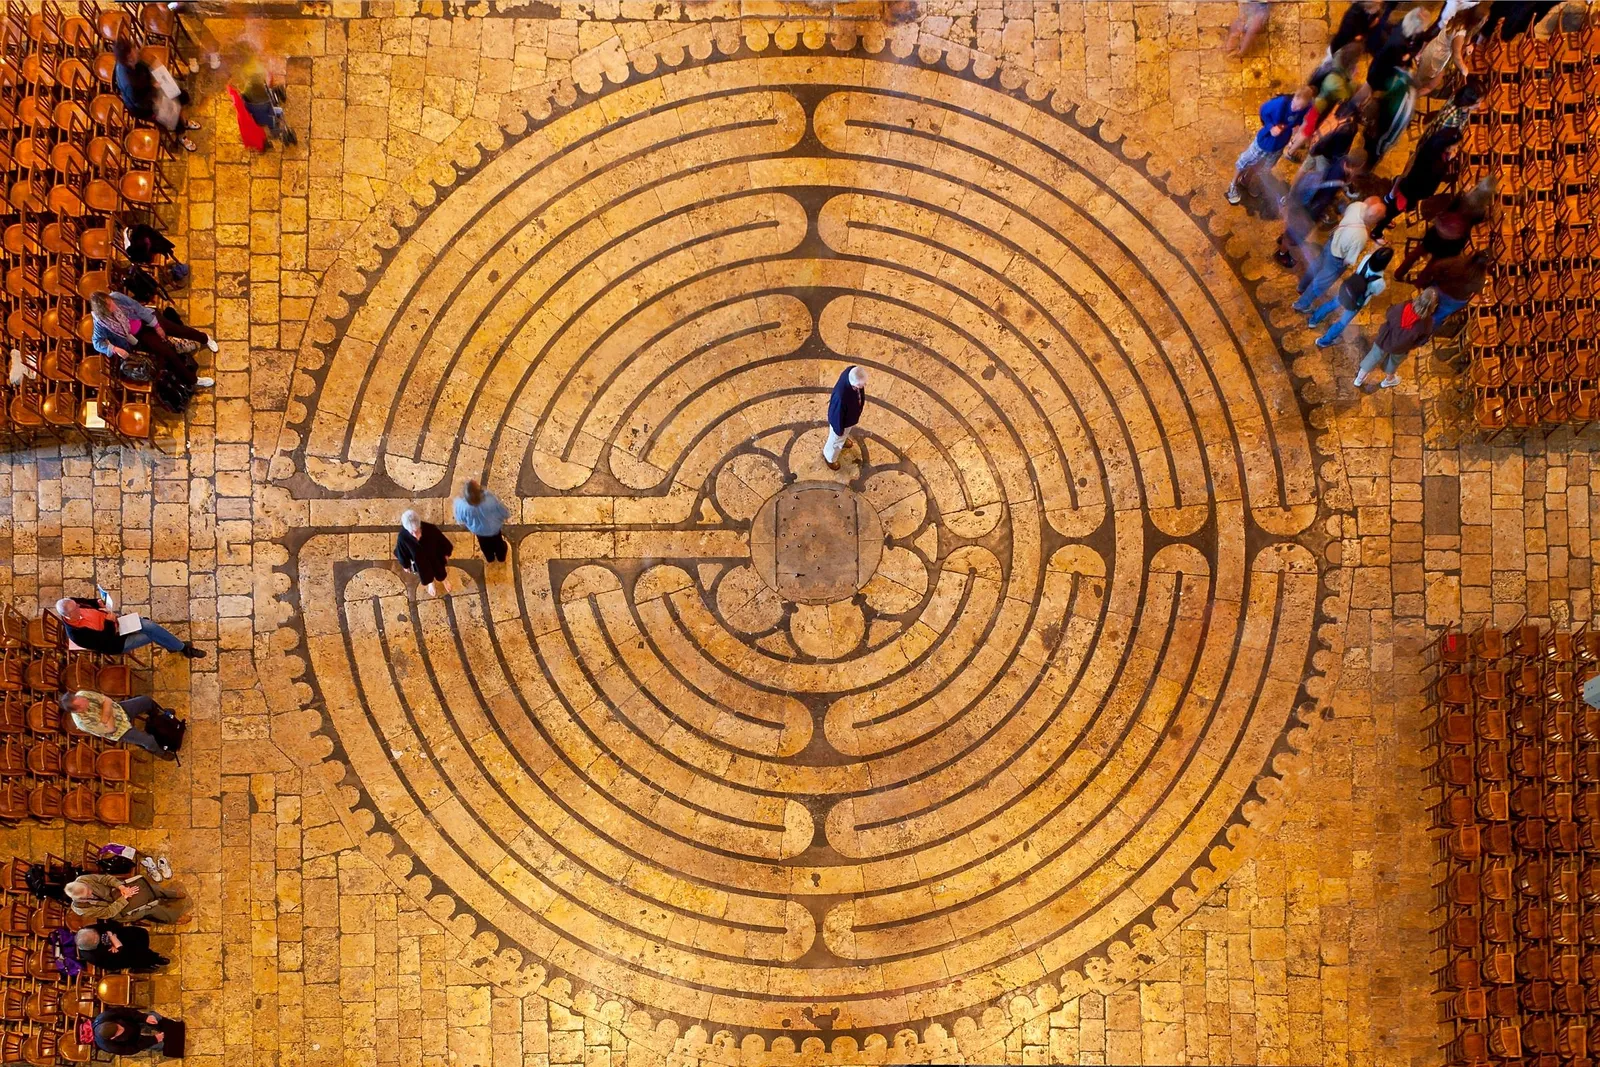 Walk the World's Most Meditative Labyrinths | Travel| Smithsonian Magazine